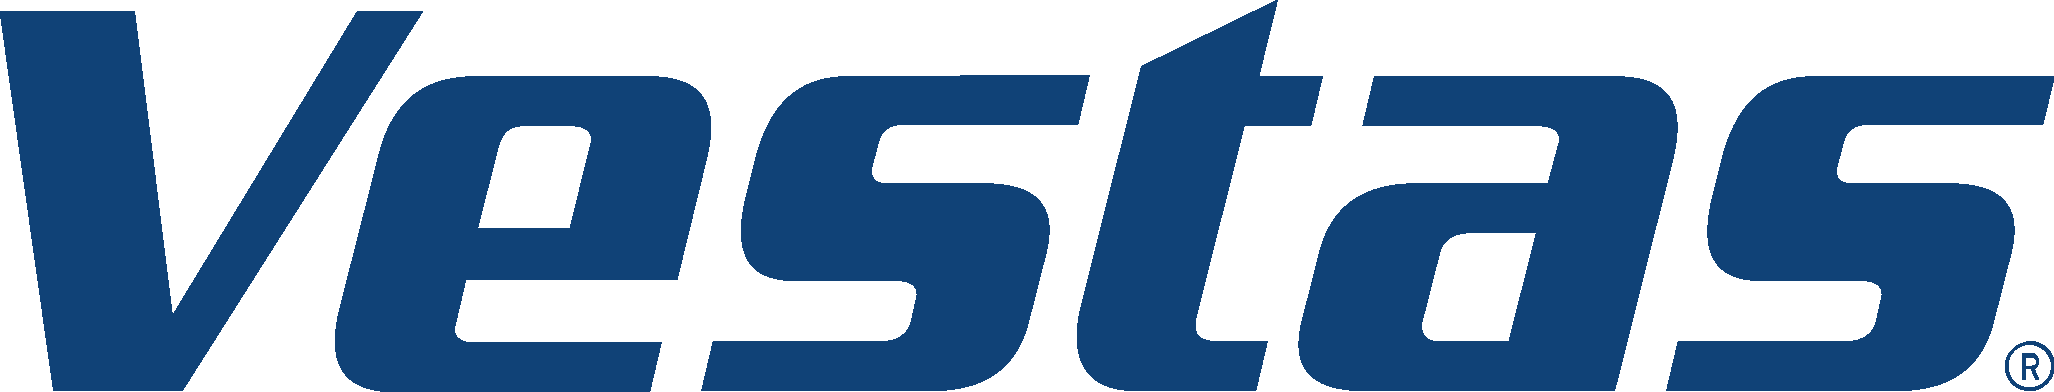 Vestas Logo png